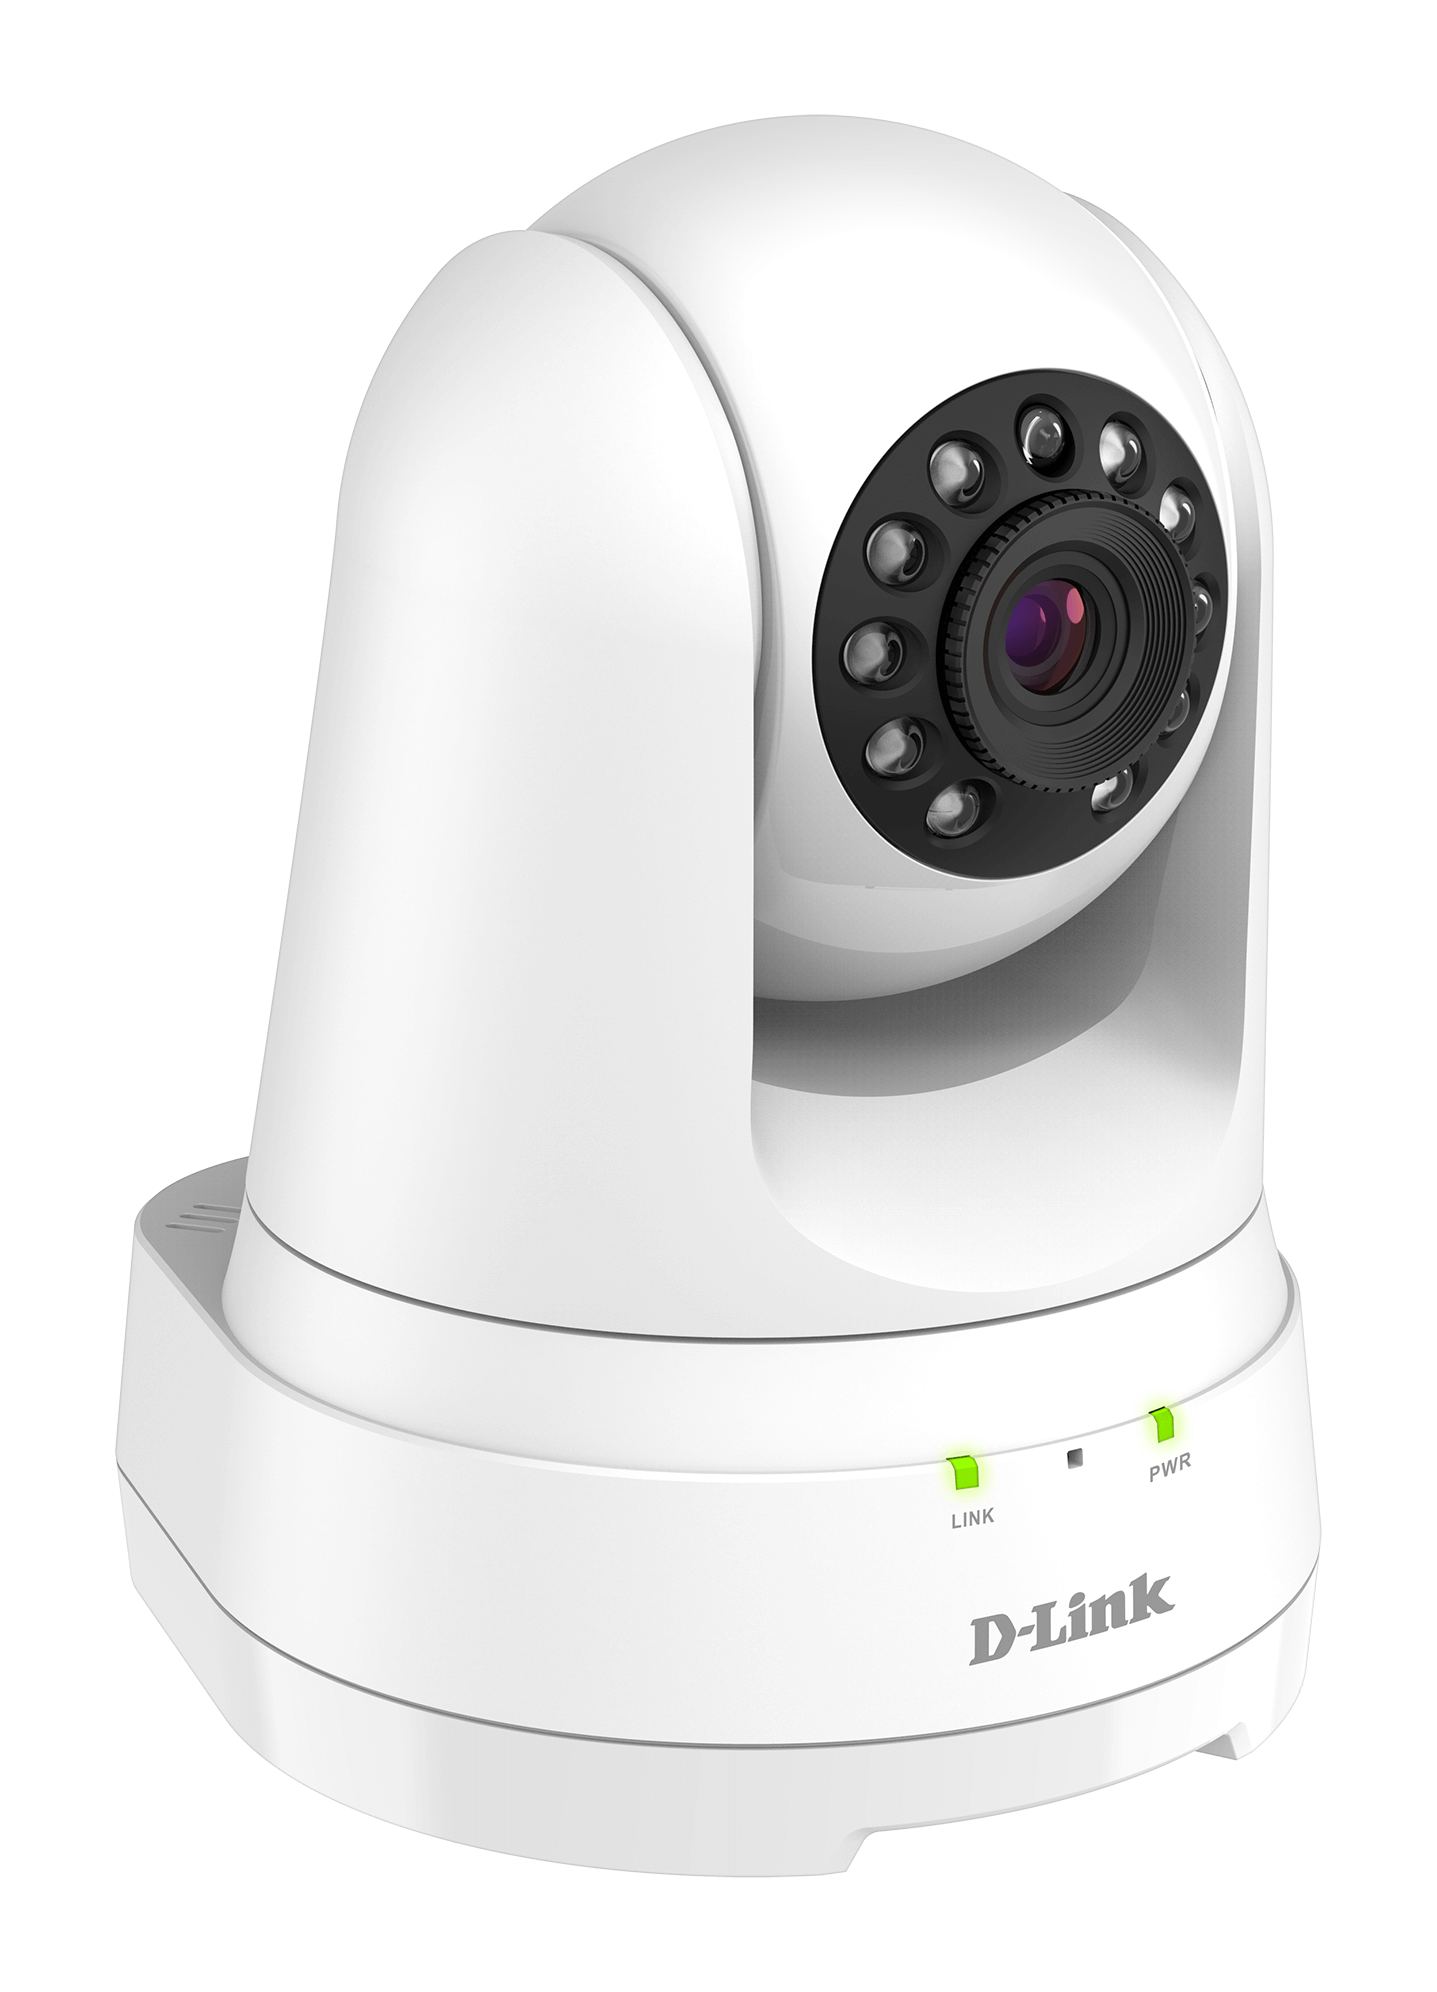 D-Link DCS-8525LH Full HD Pan & Tilt Wi-Fi Camera 2-Way Audio selaed new 